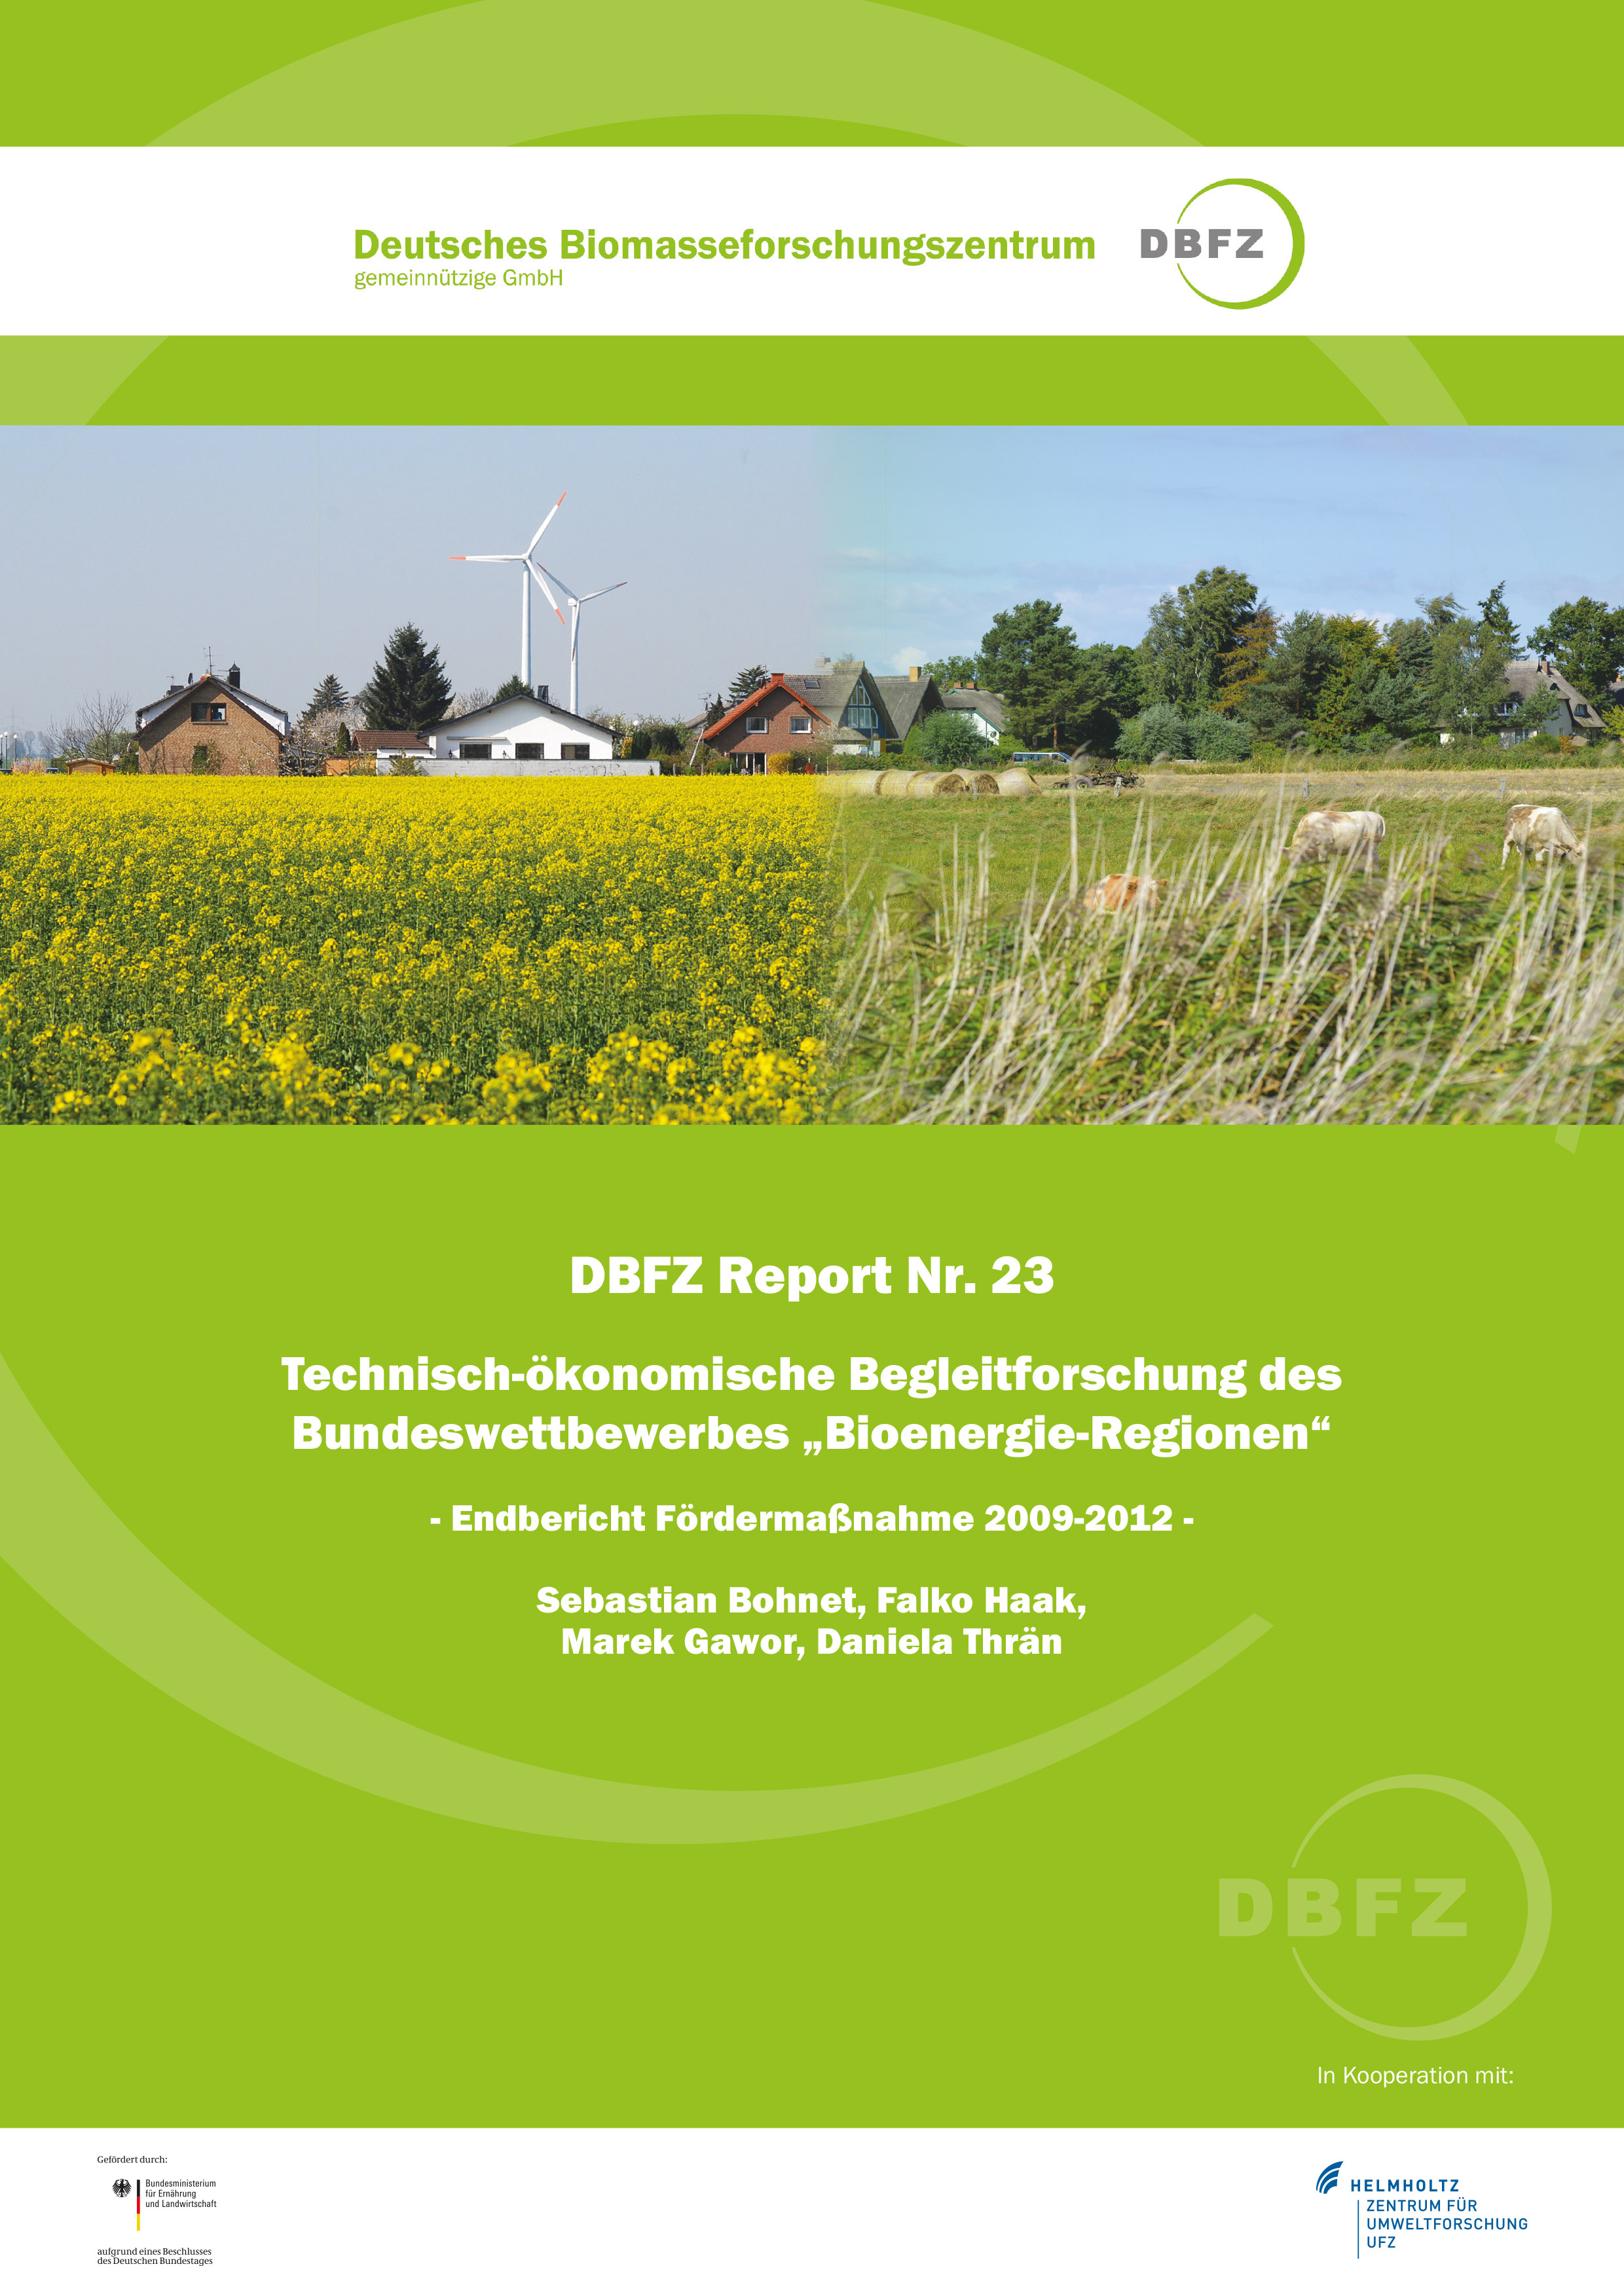 DBFZ Report No. 23